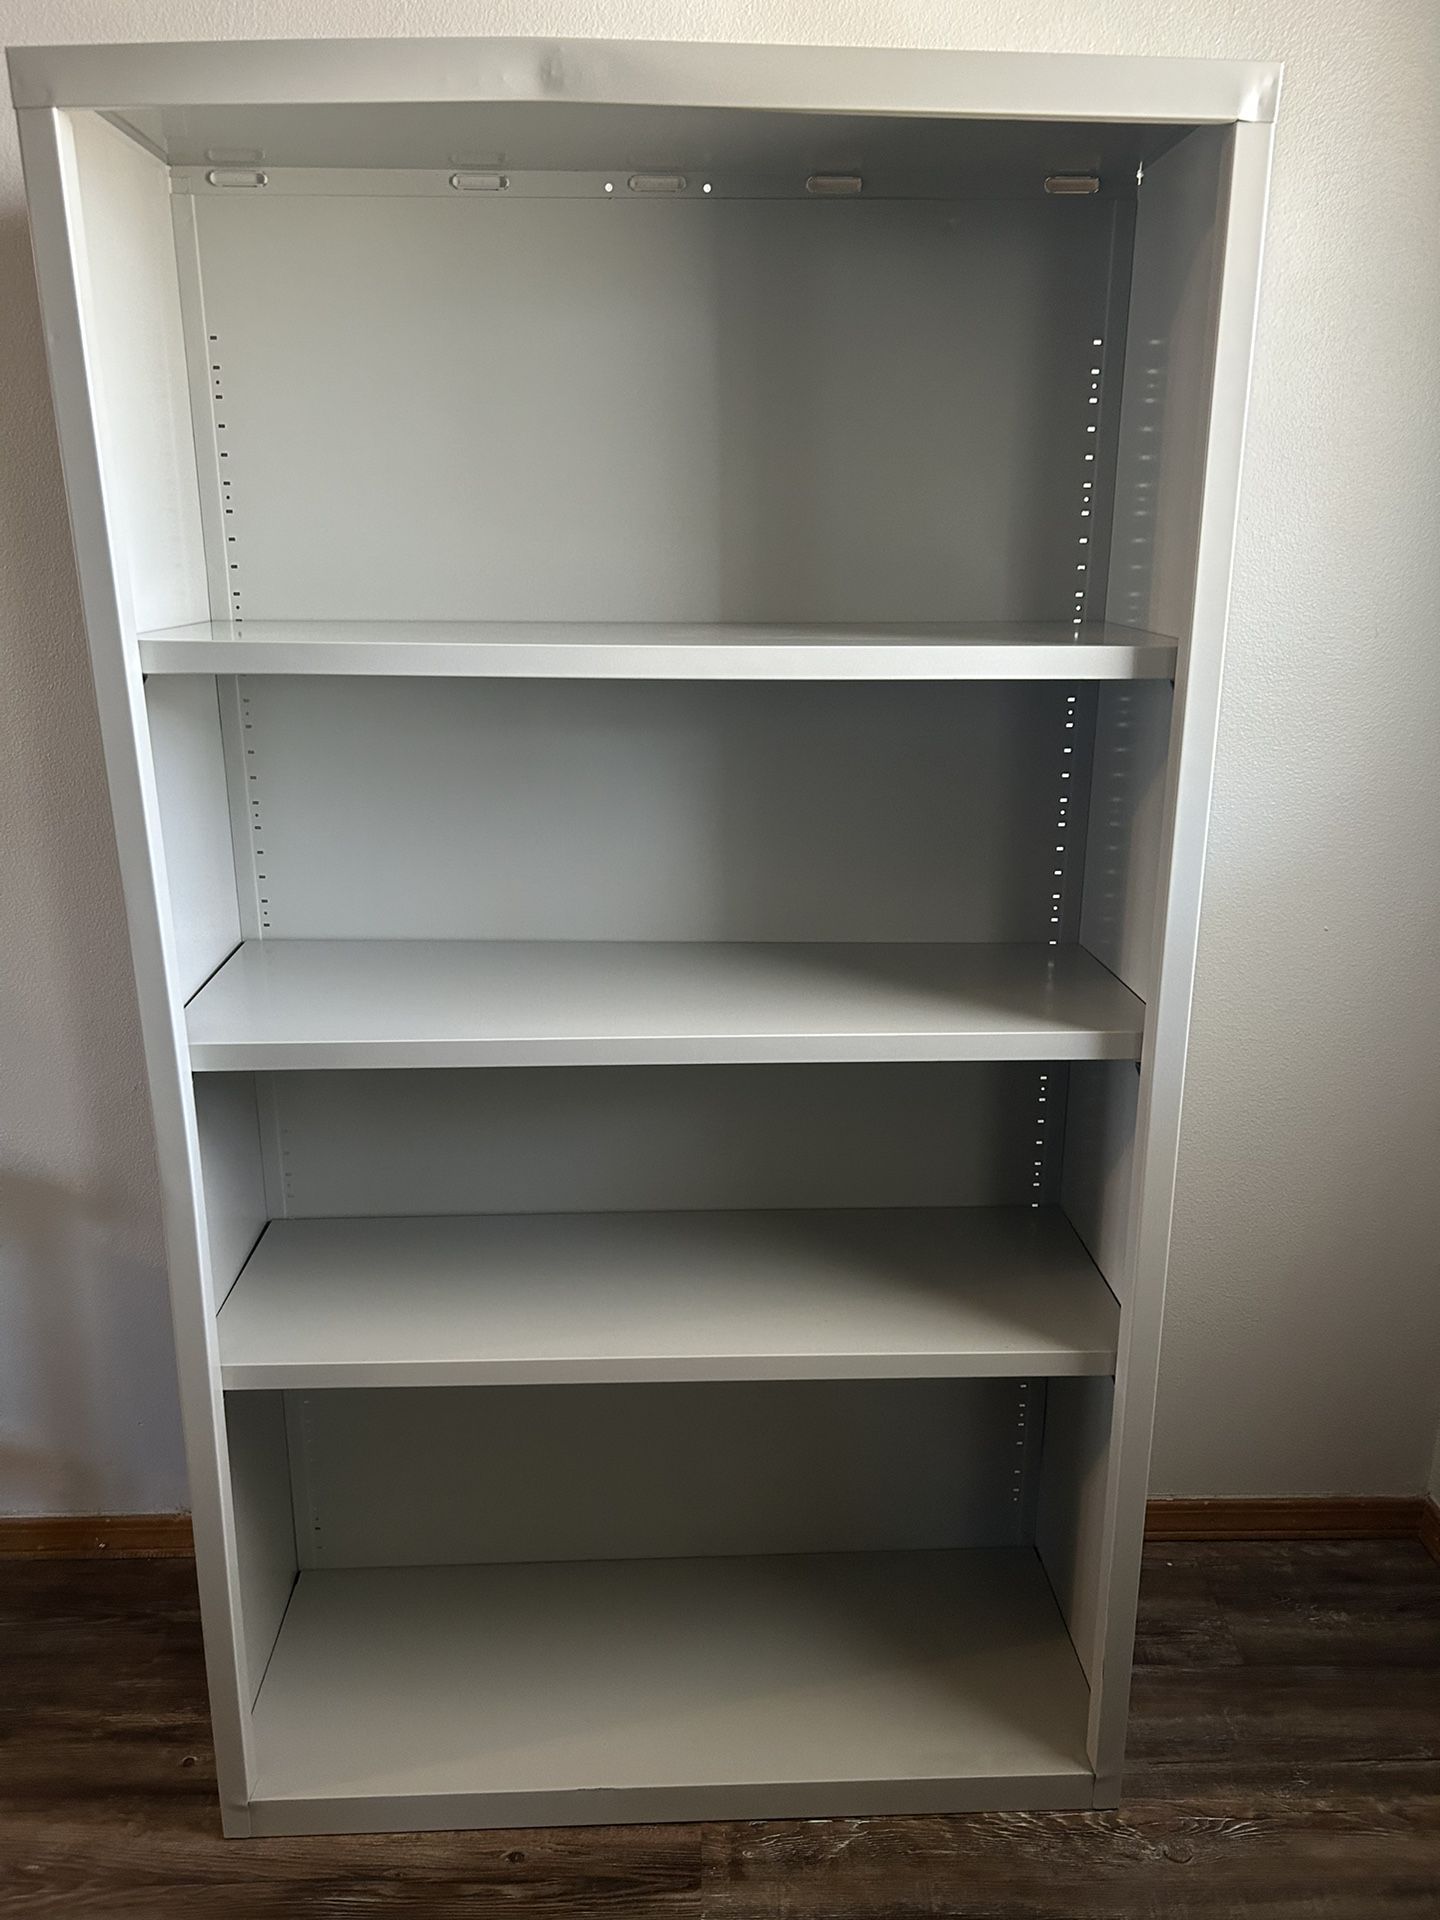 Hirsh 4 Shelf Metal Bookcase in Light Gray